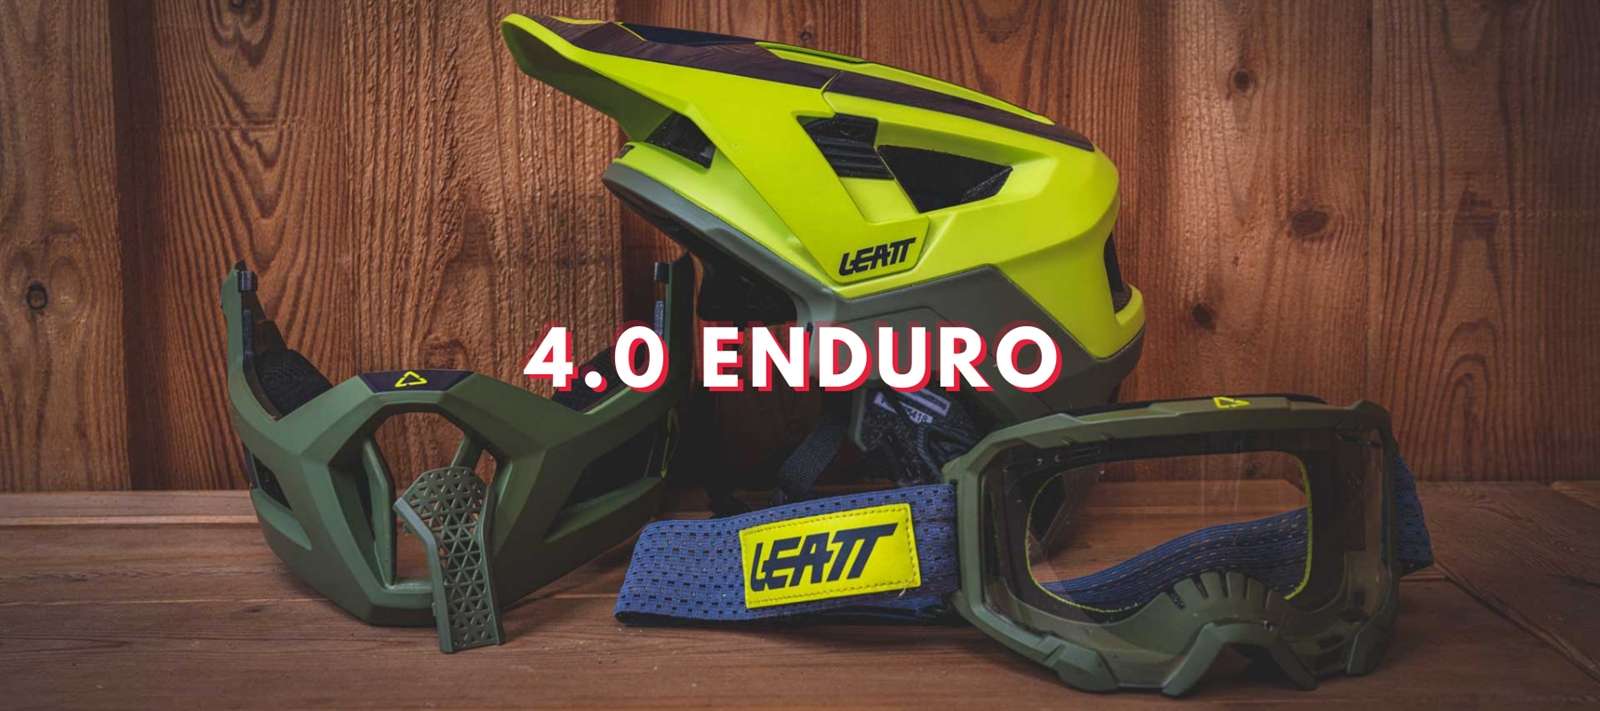 4.0 Enduro Helmet by LEATT - The Freedom to Choose